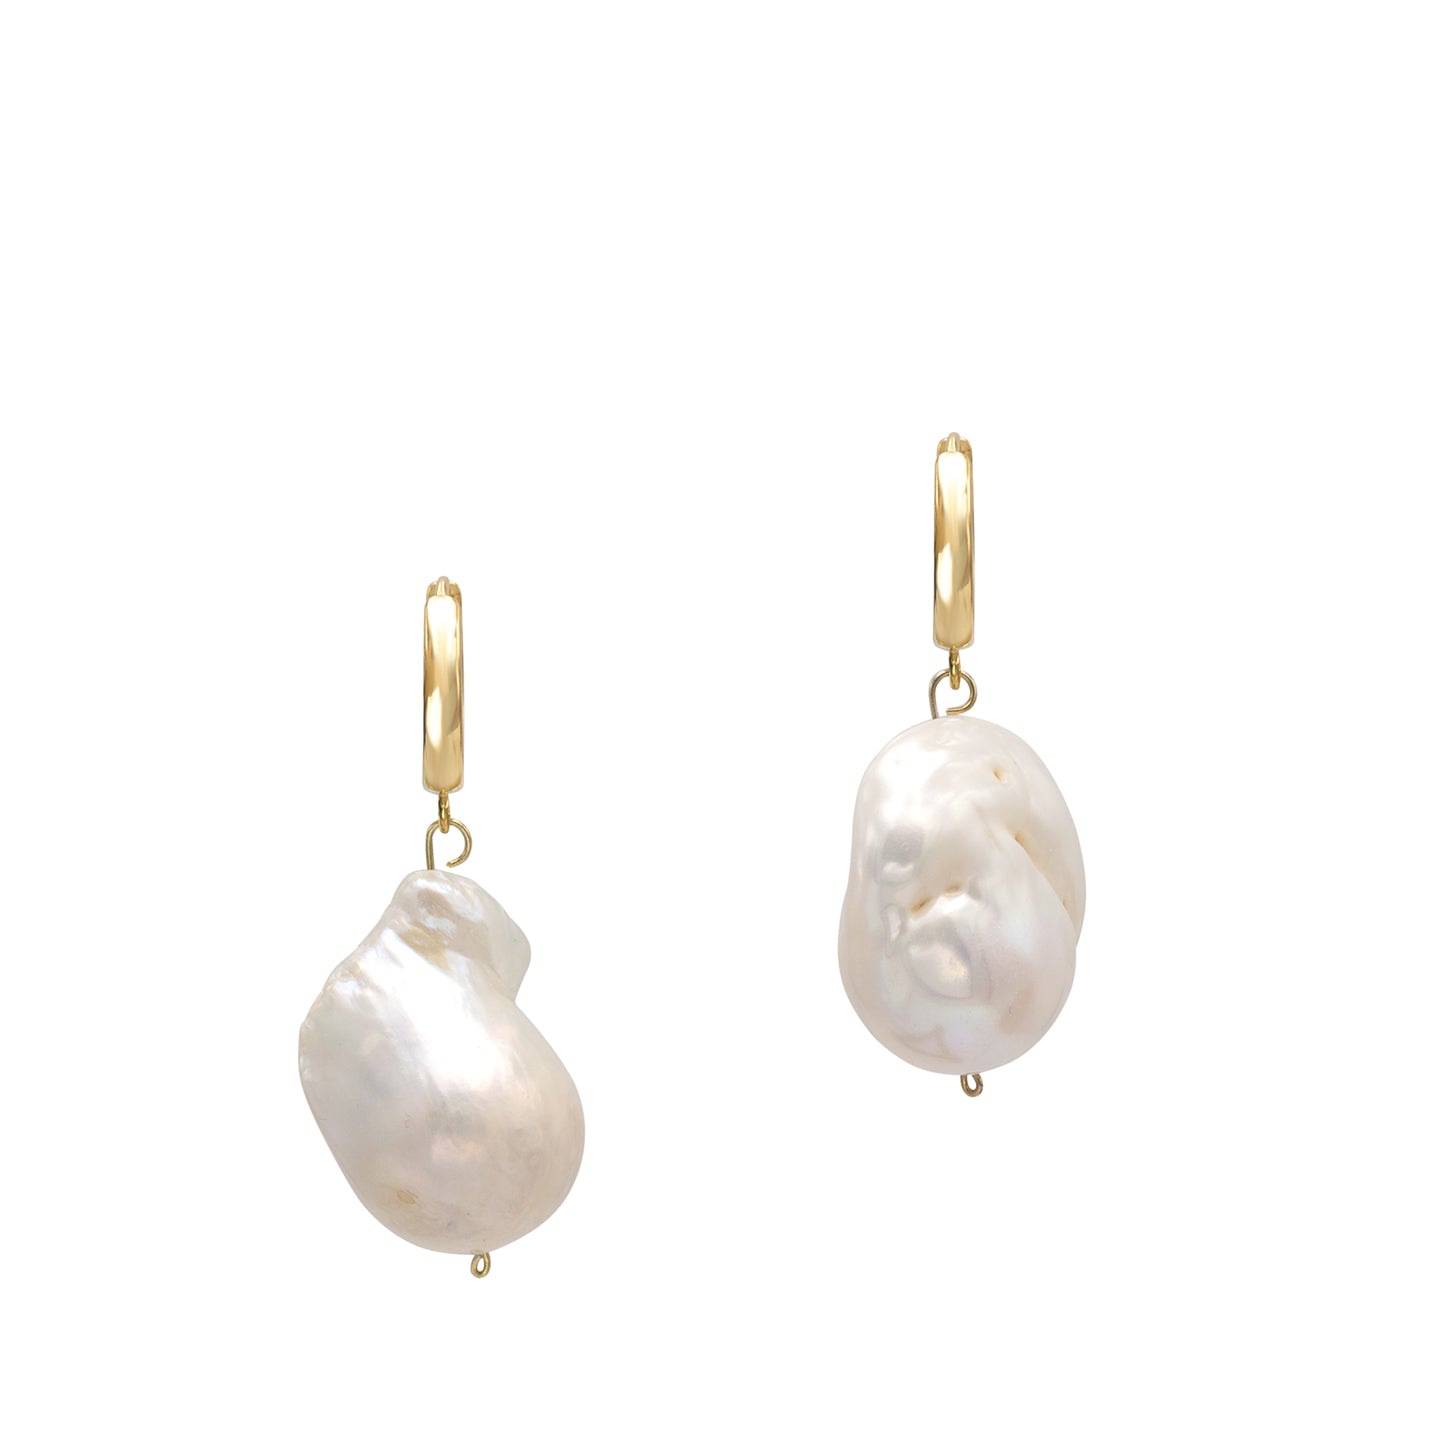 Cercei argint cu perle baroc Festive Look - placati aur galben 18K